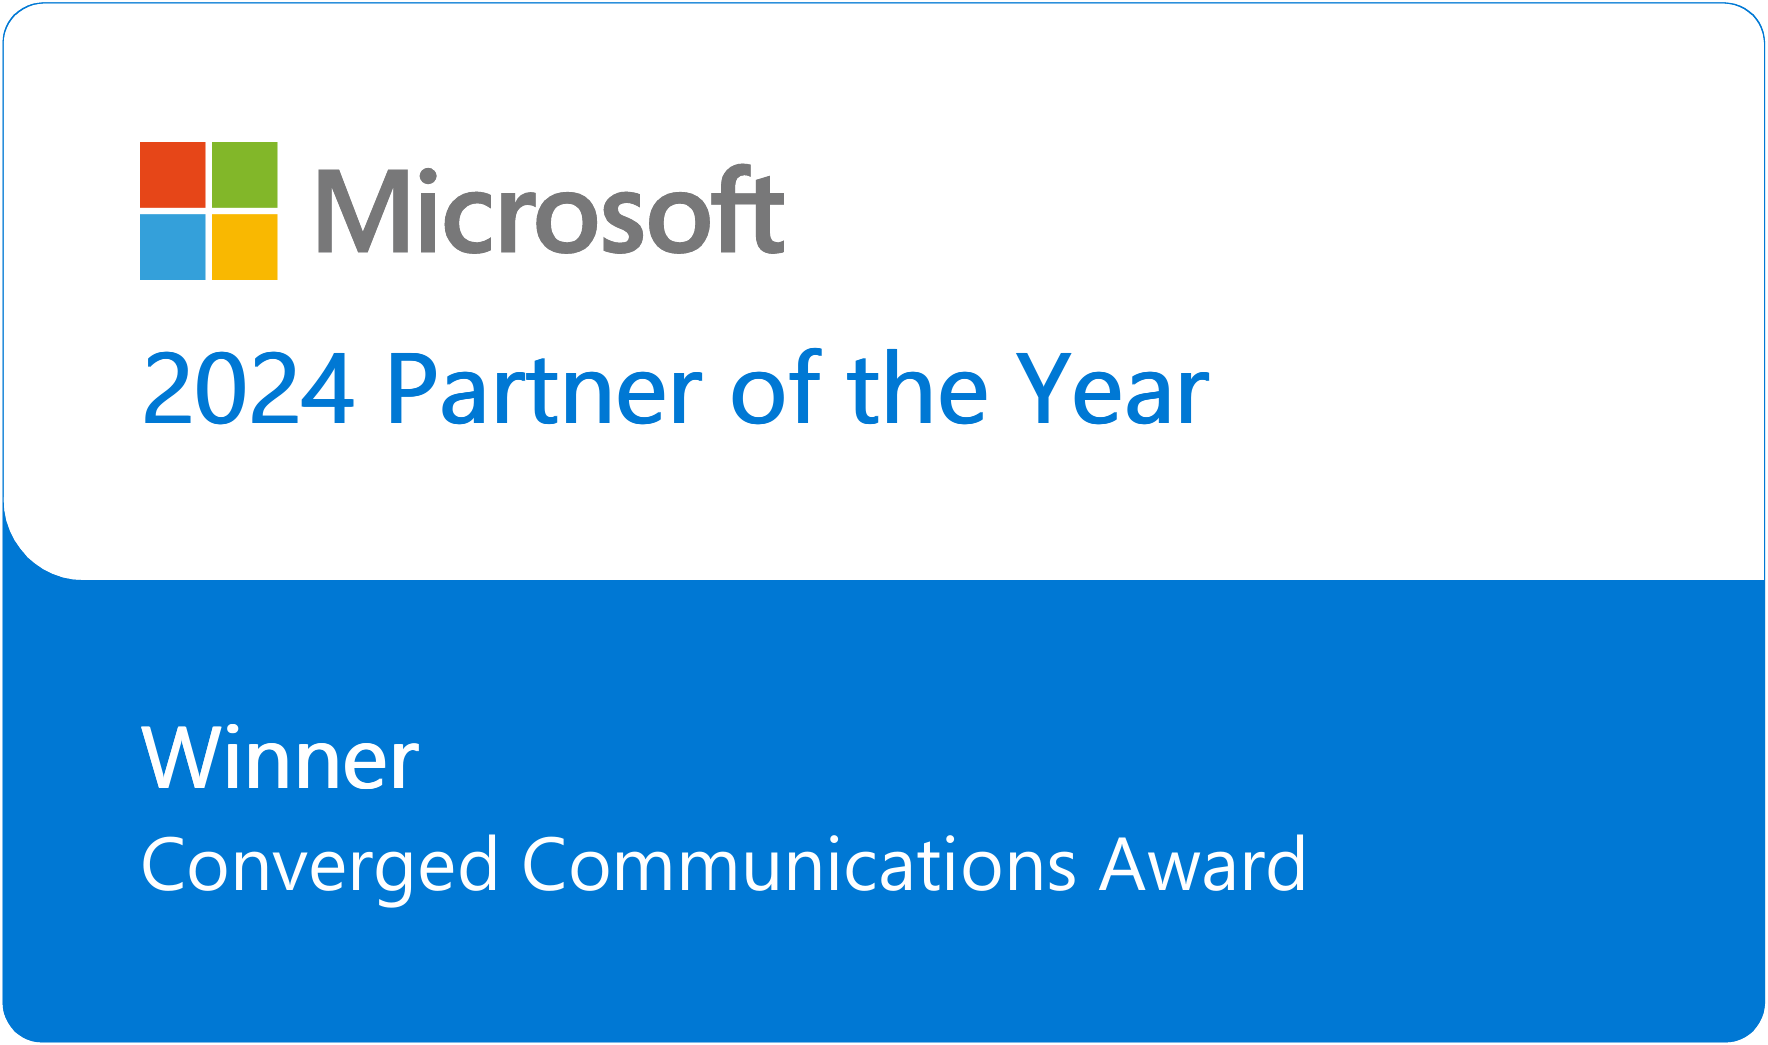 Microsoft Partner of the Year 2024 award winner logo